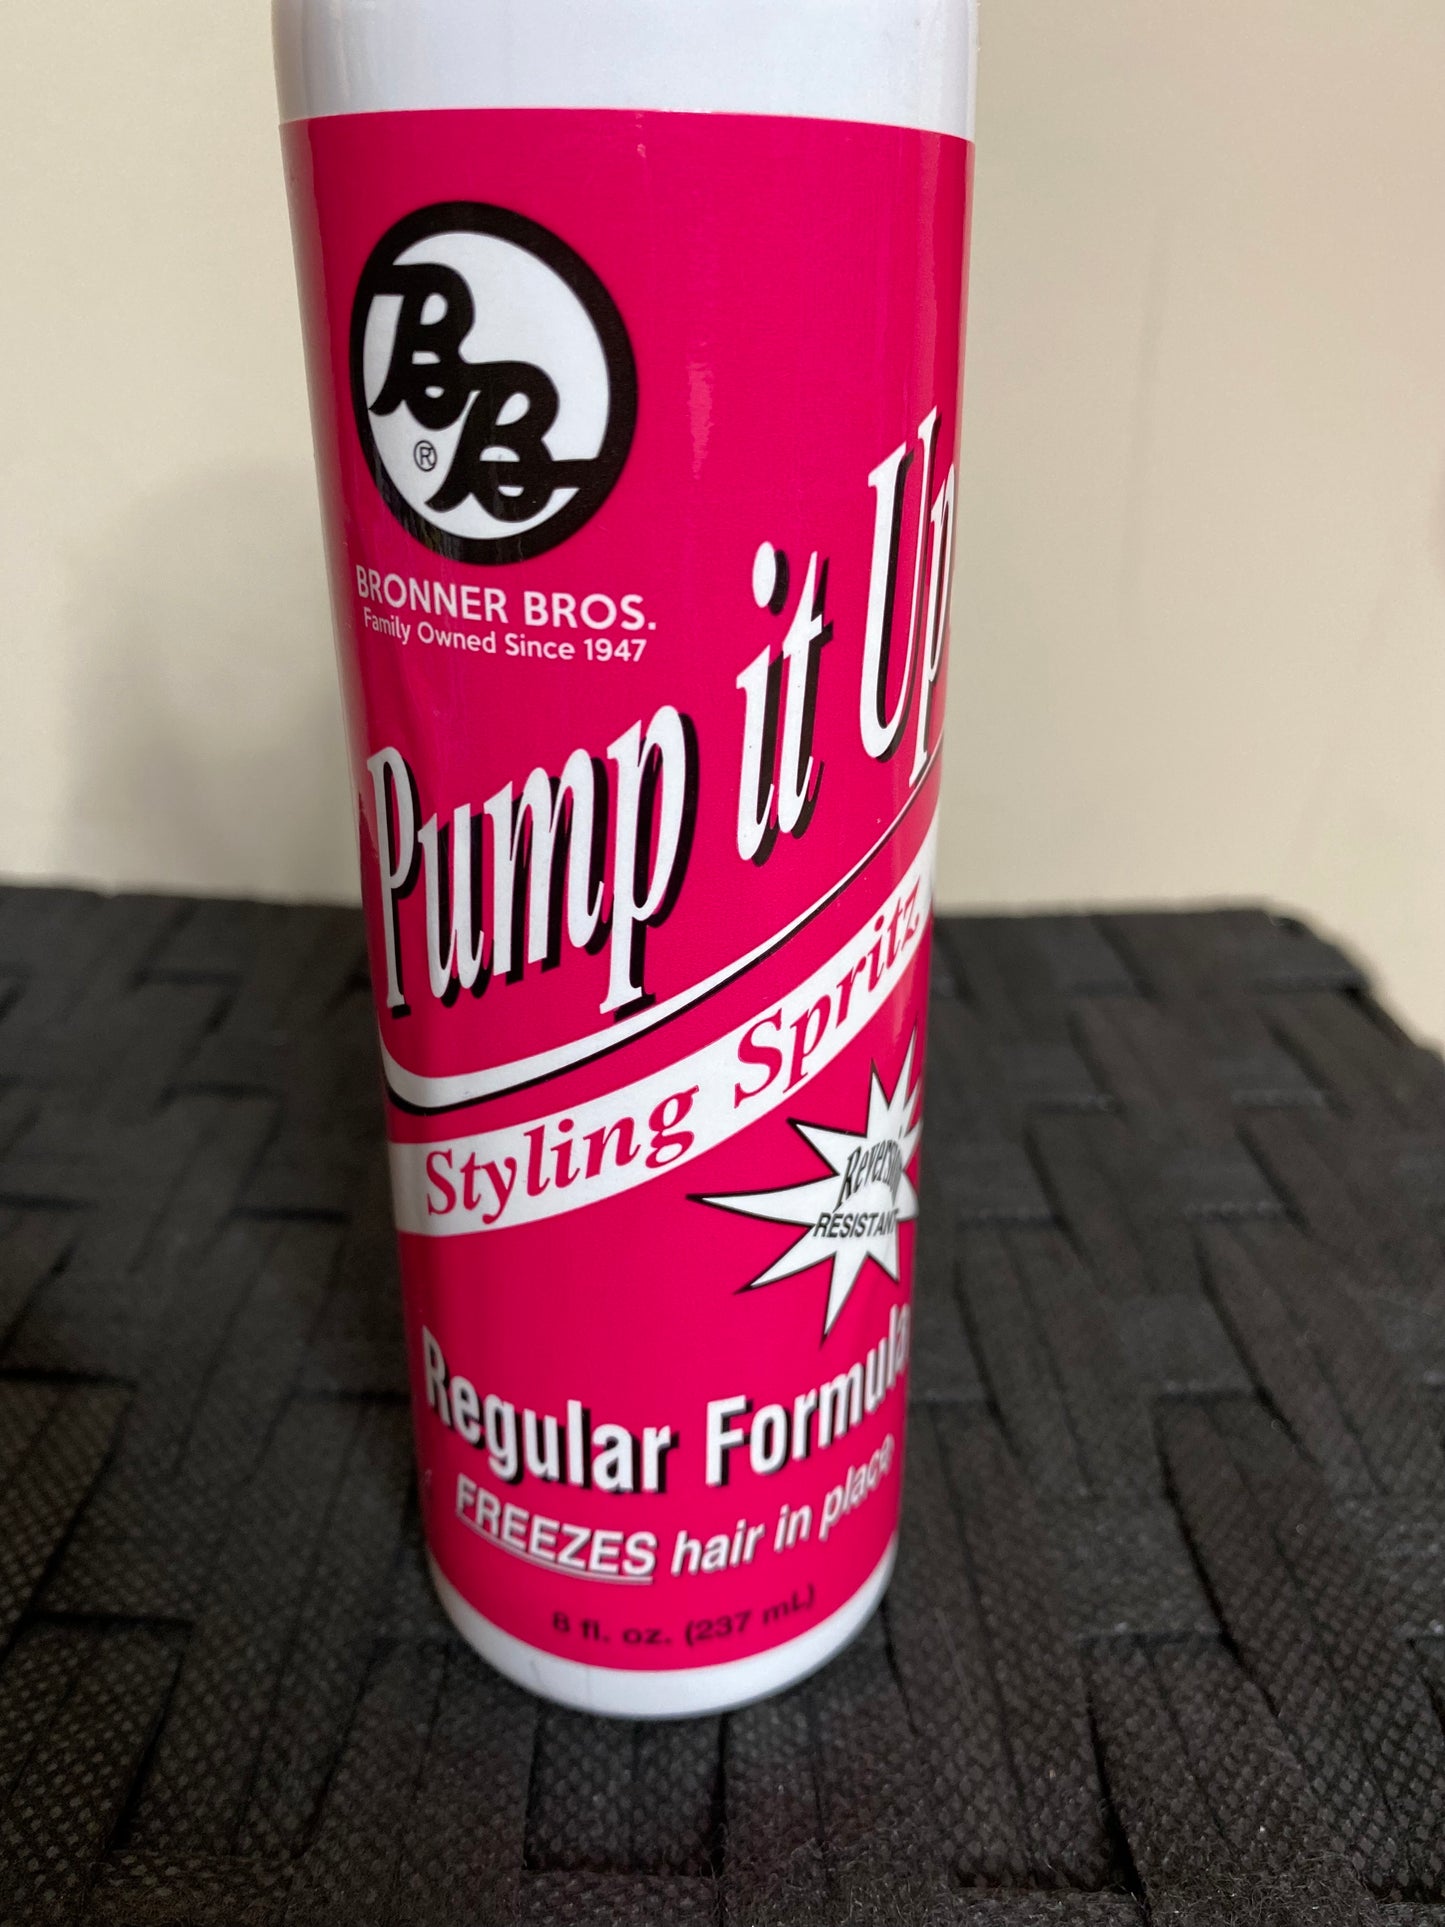 Bronner Bros Pump it Up! Styling Spritz, Regular Formula - 8 fl oz